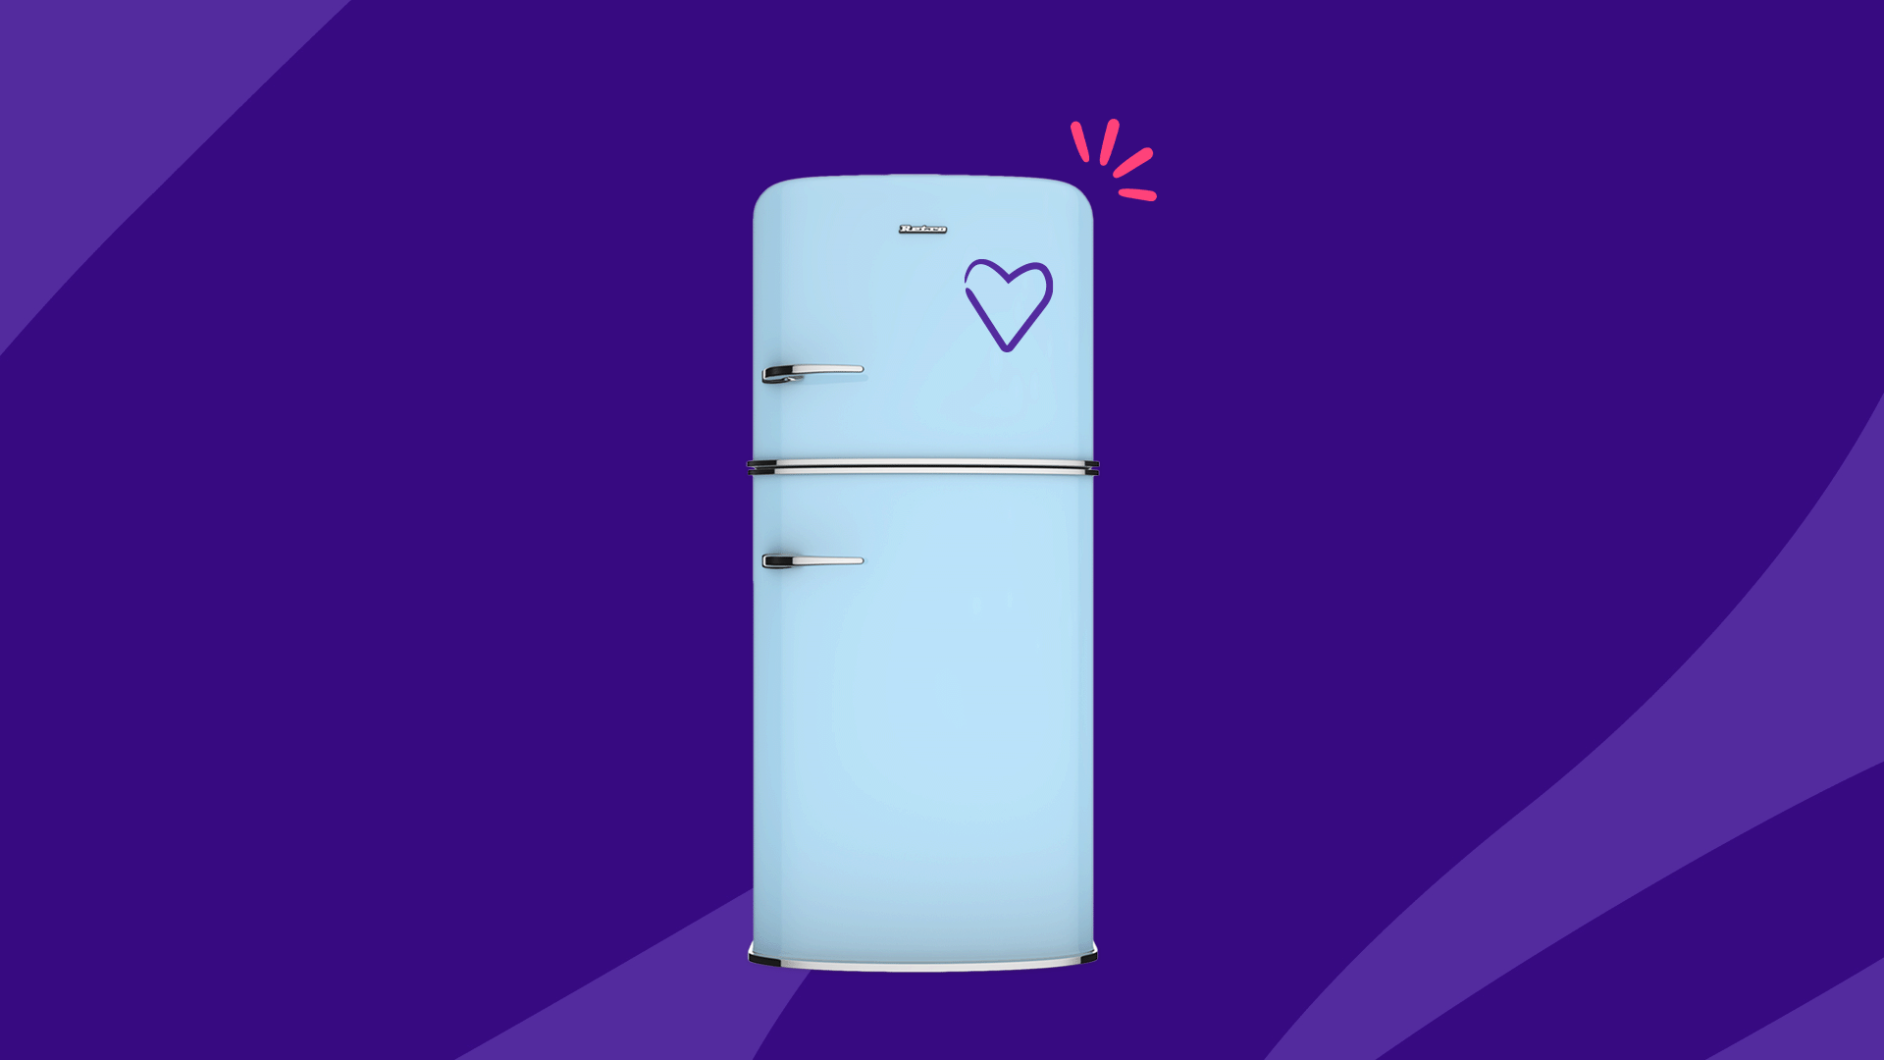 A refrigerator represents a heart healthy diet